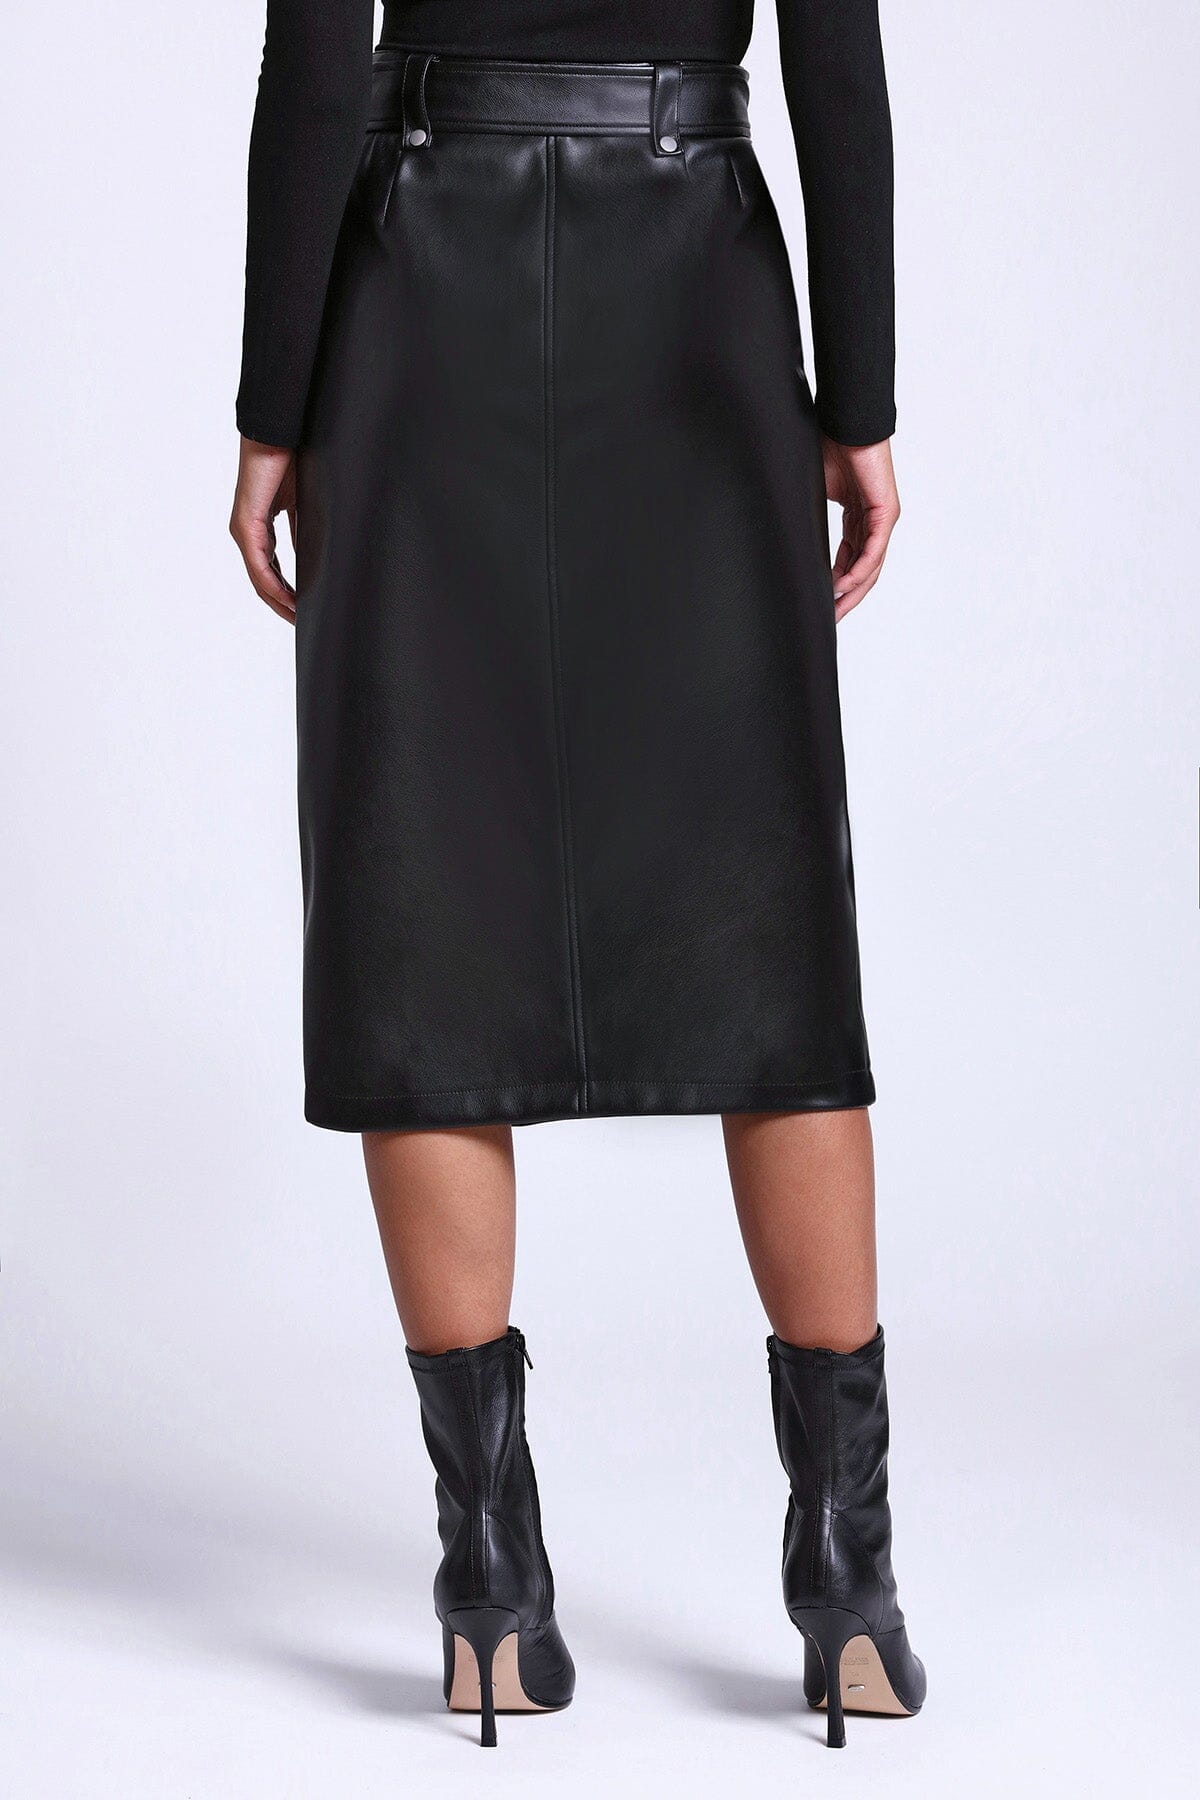 Black faux leather long moto pencil skirt by Avec Les Filles fashion skirts 